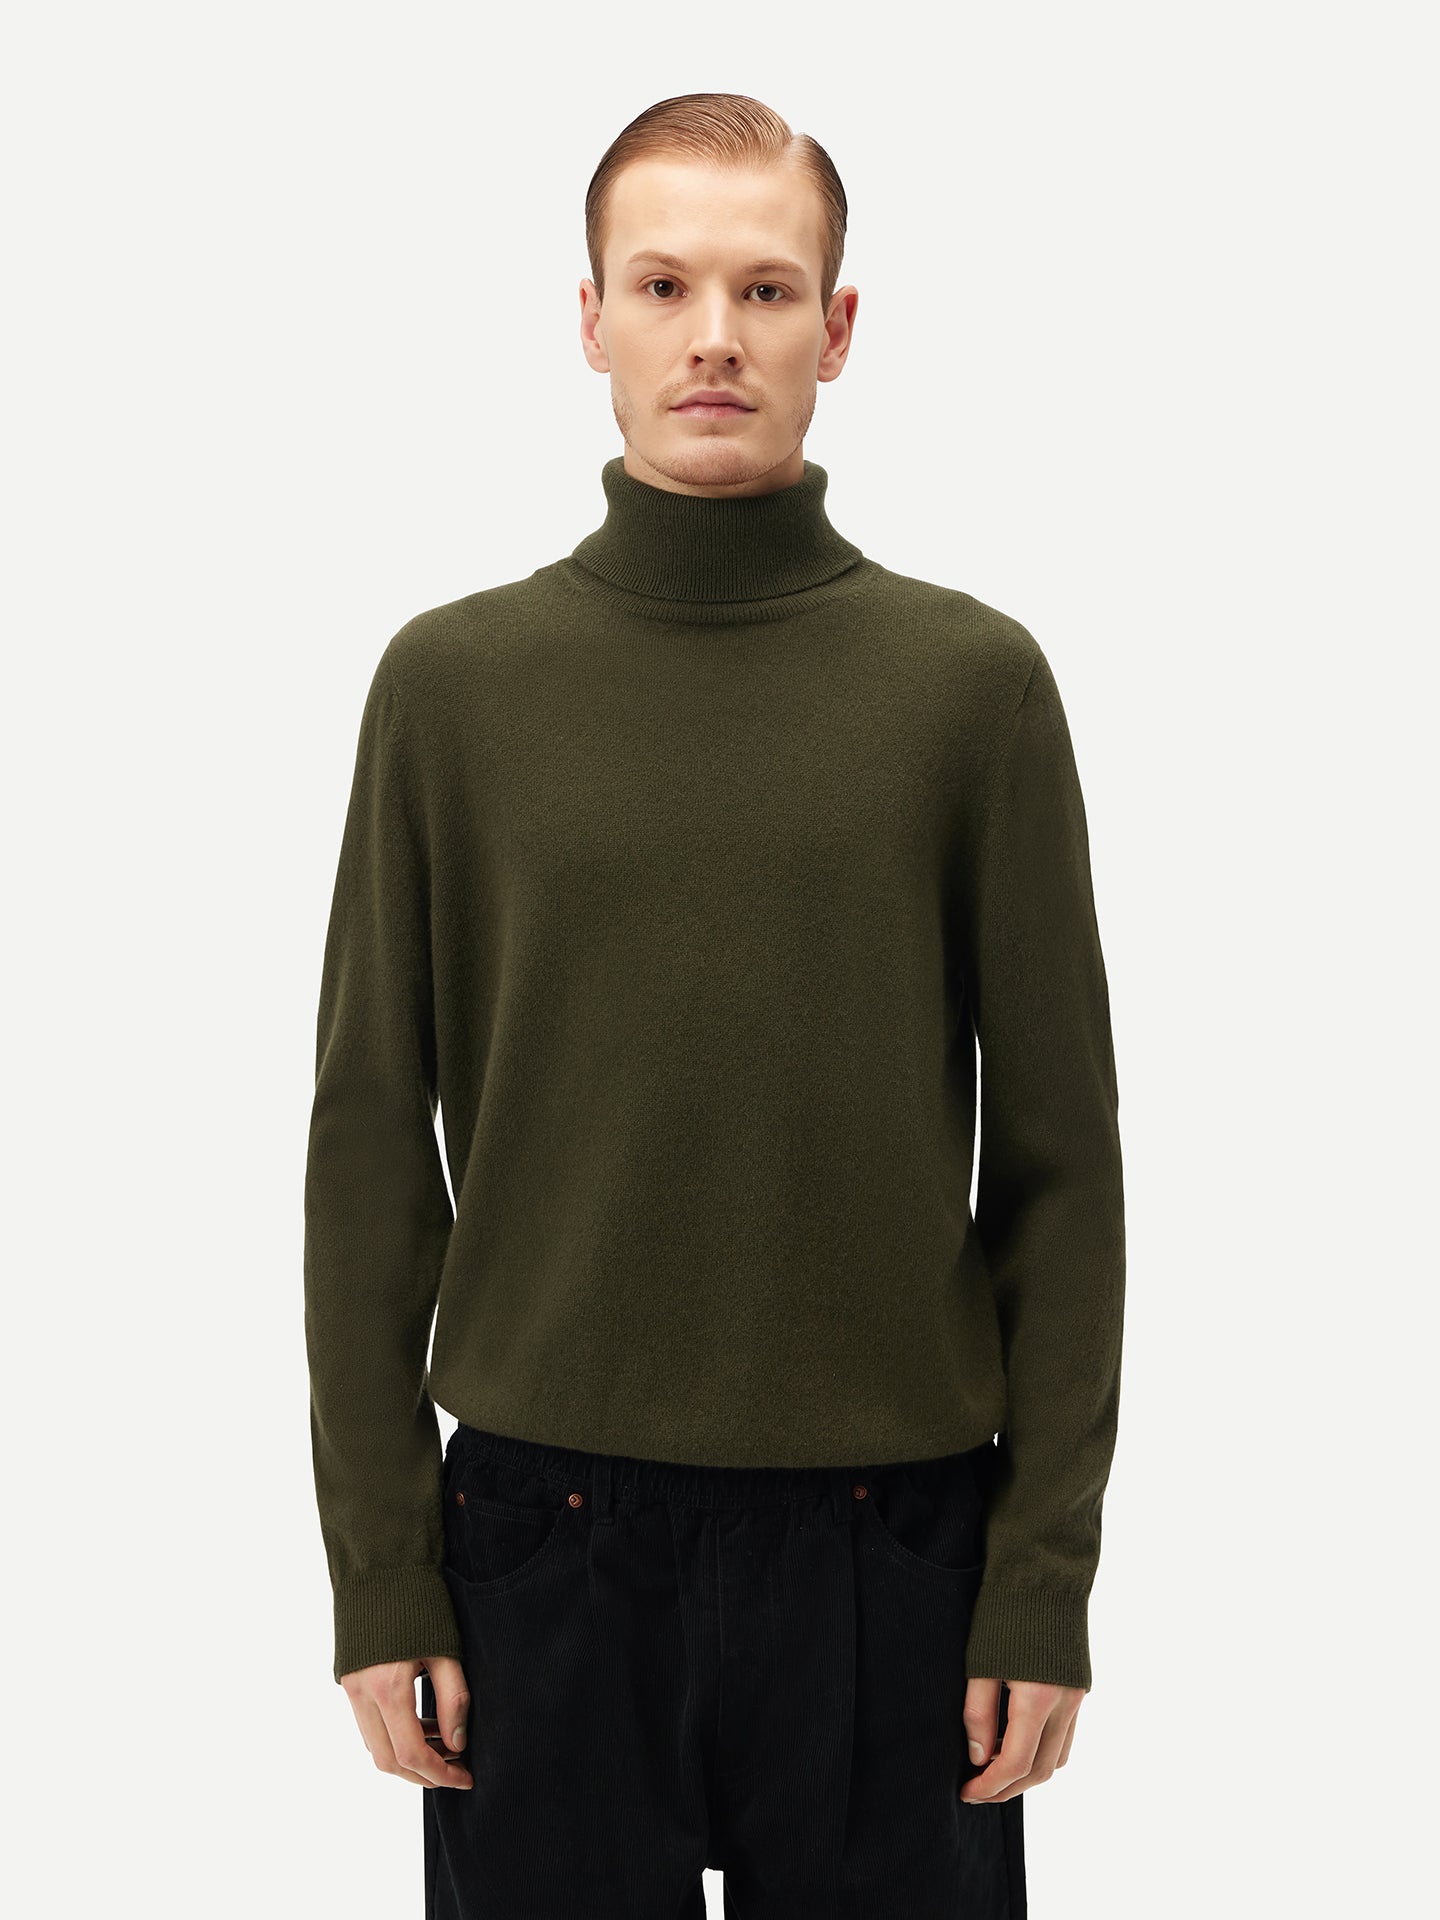 Men's Cashmere Basic Turtleneck Green - Gobi Cashmere